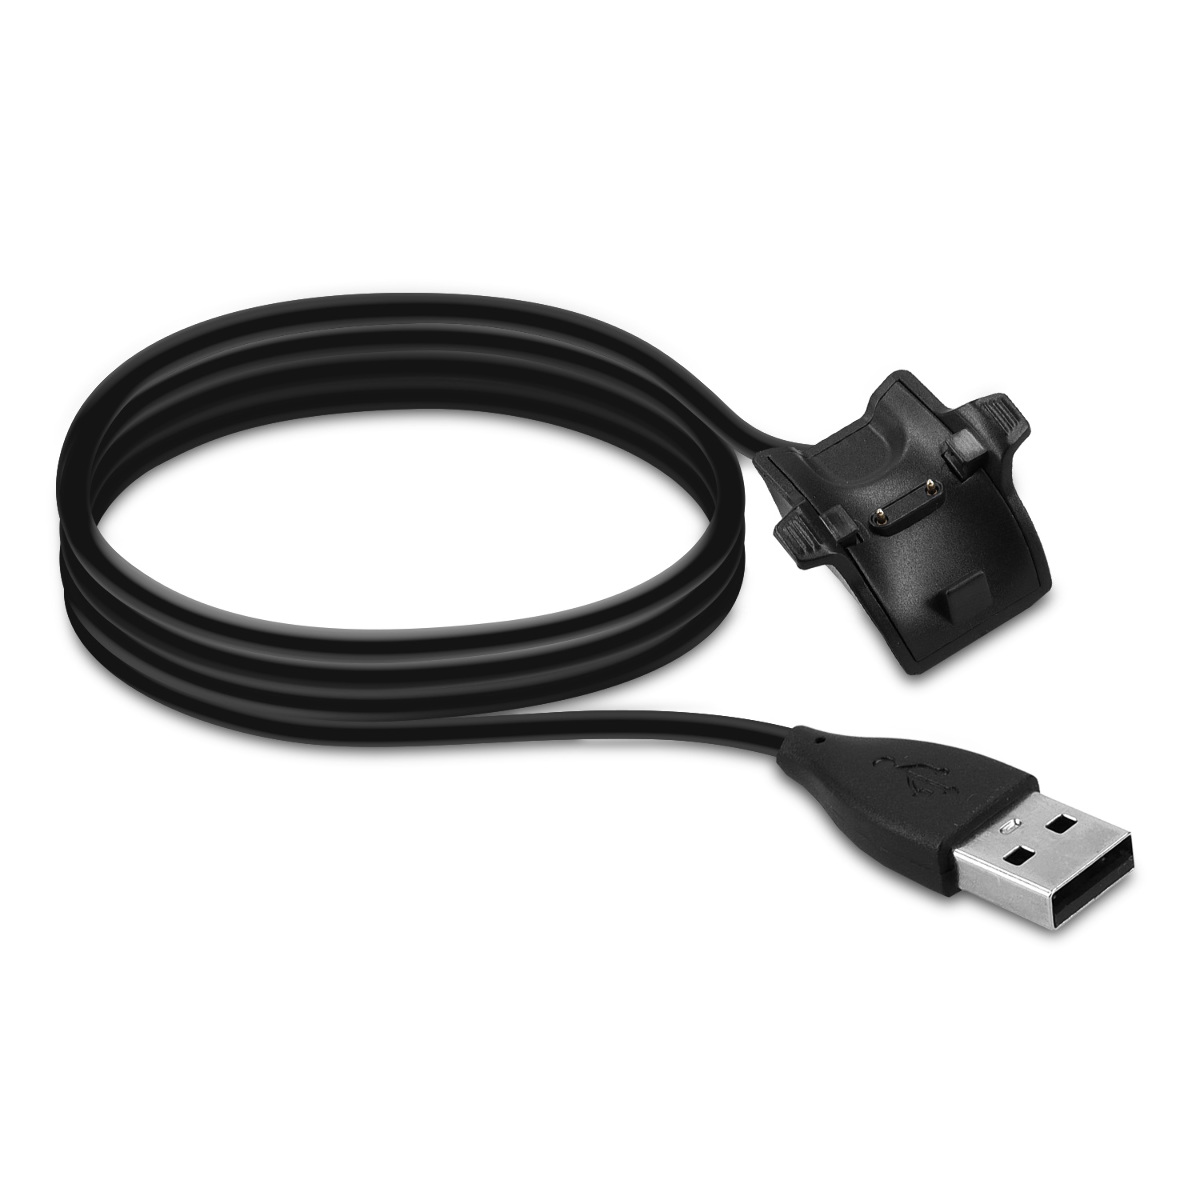 Für Huawei Honor Band 4/4 Running Tracker USB Ladekabel Ladegerät Kabel Charger 